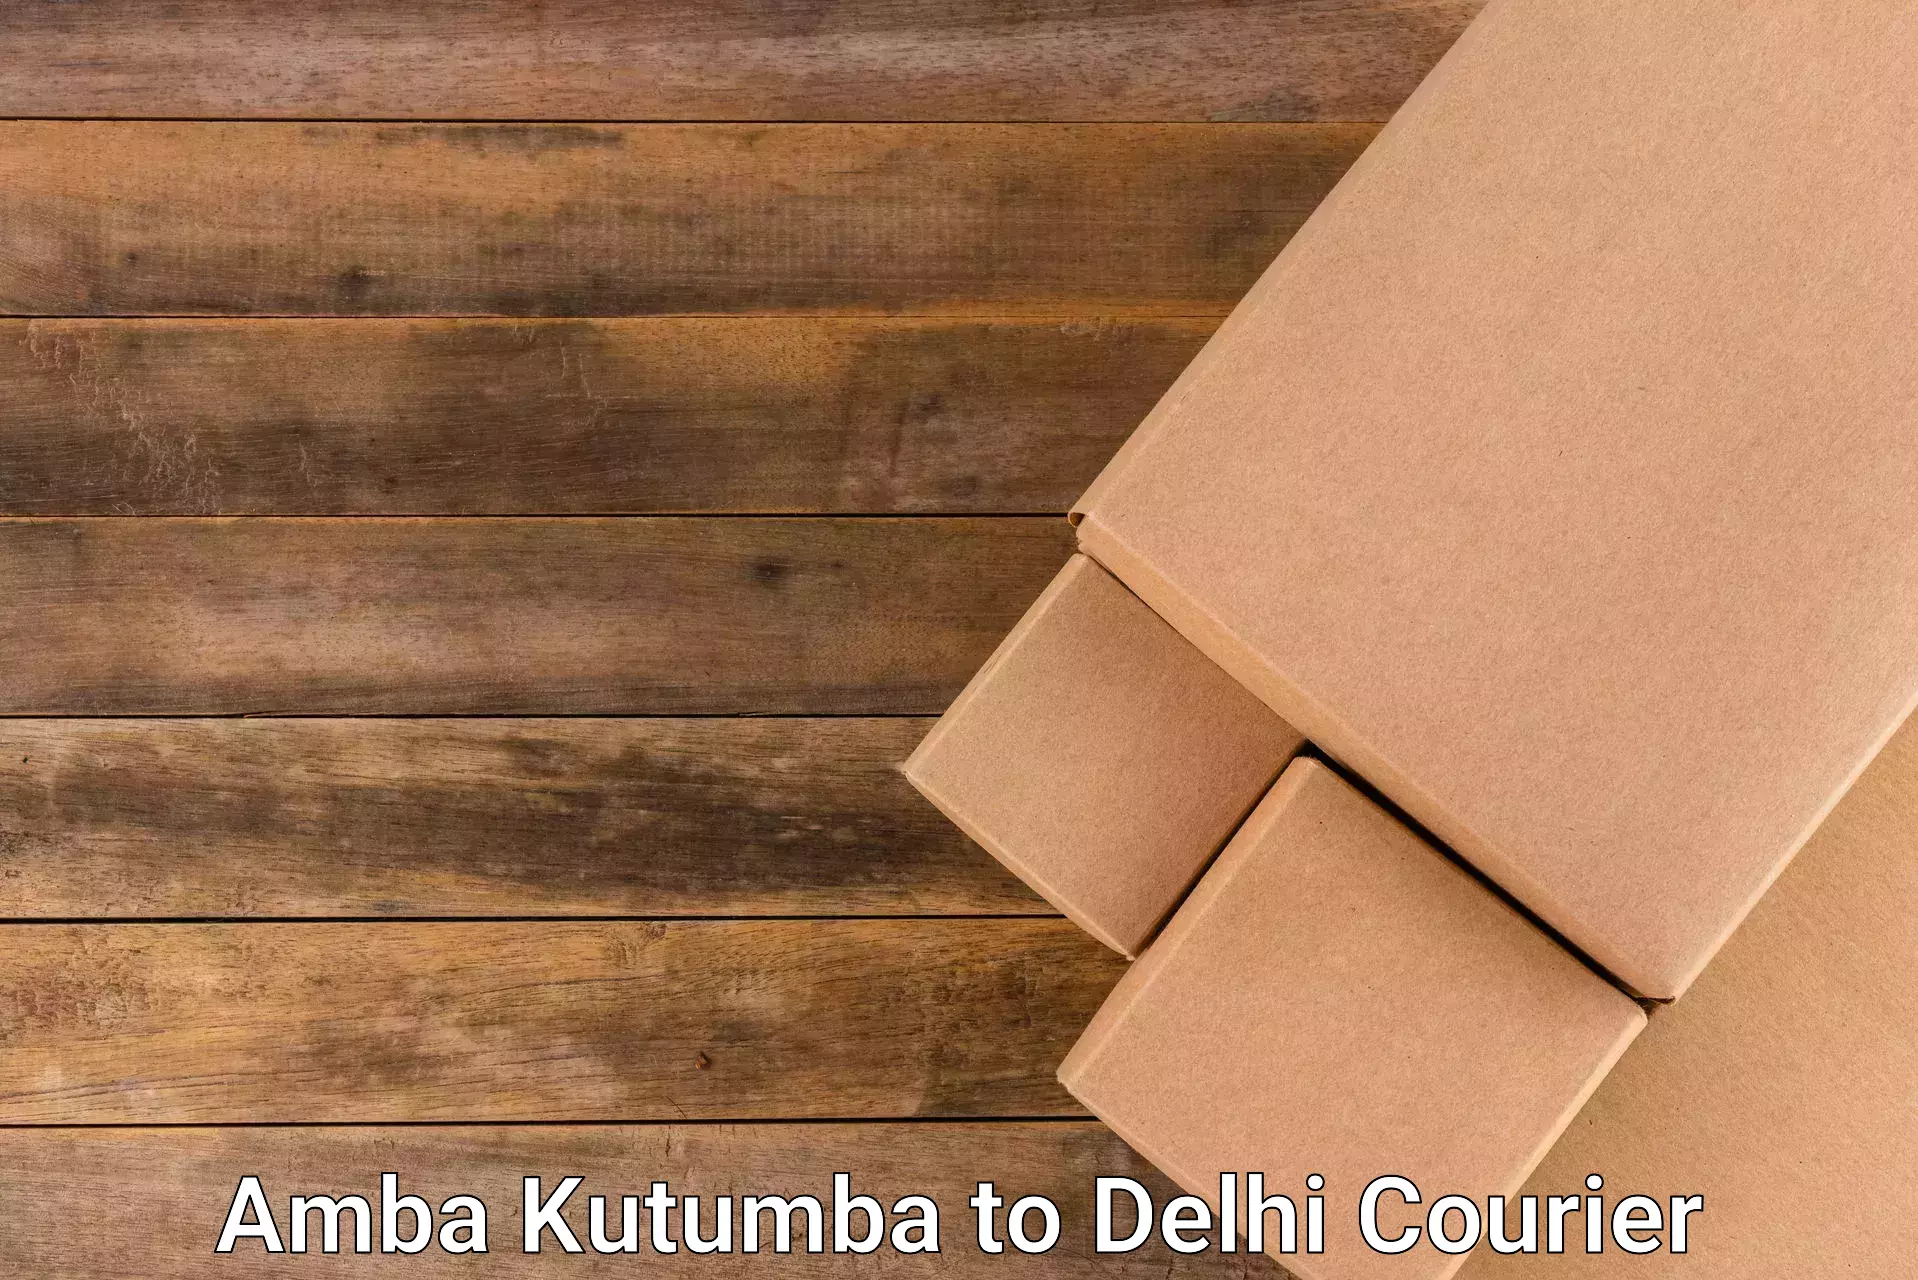 Efficient logistics management Amba Kutumba to Lodhi Road